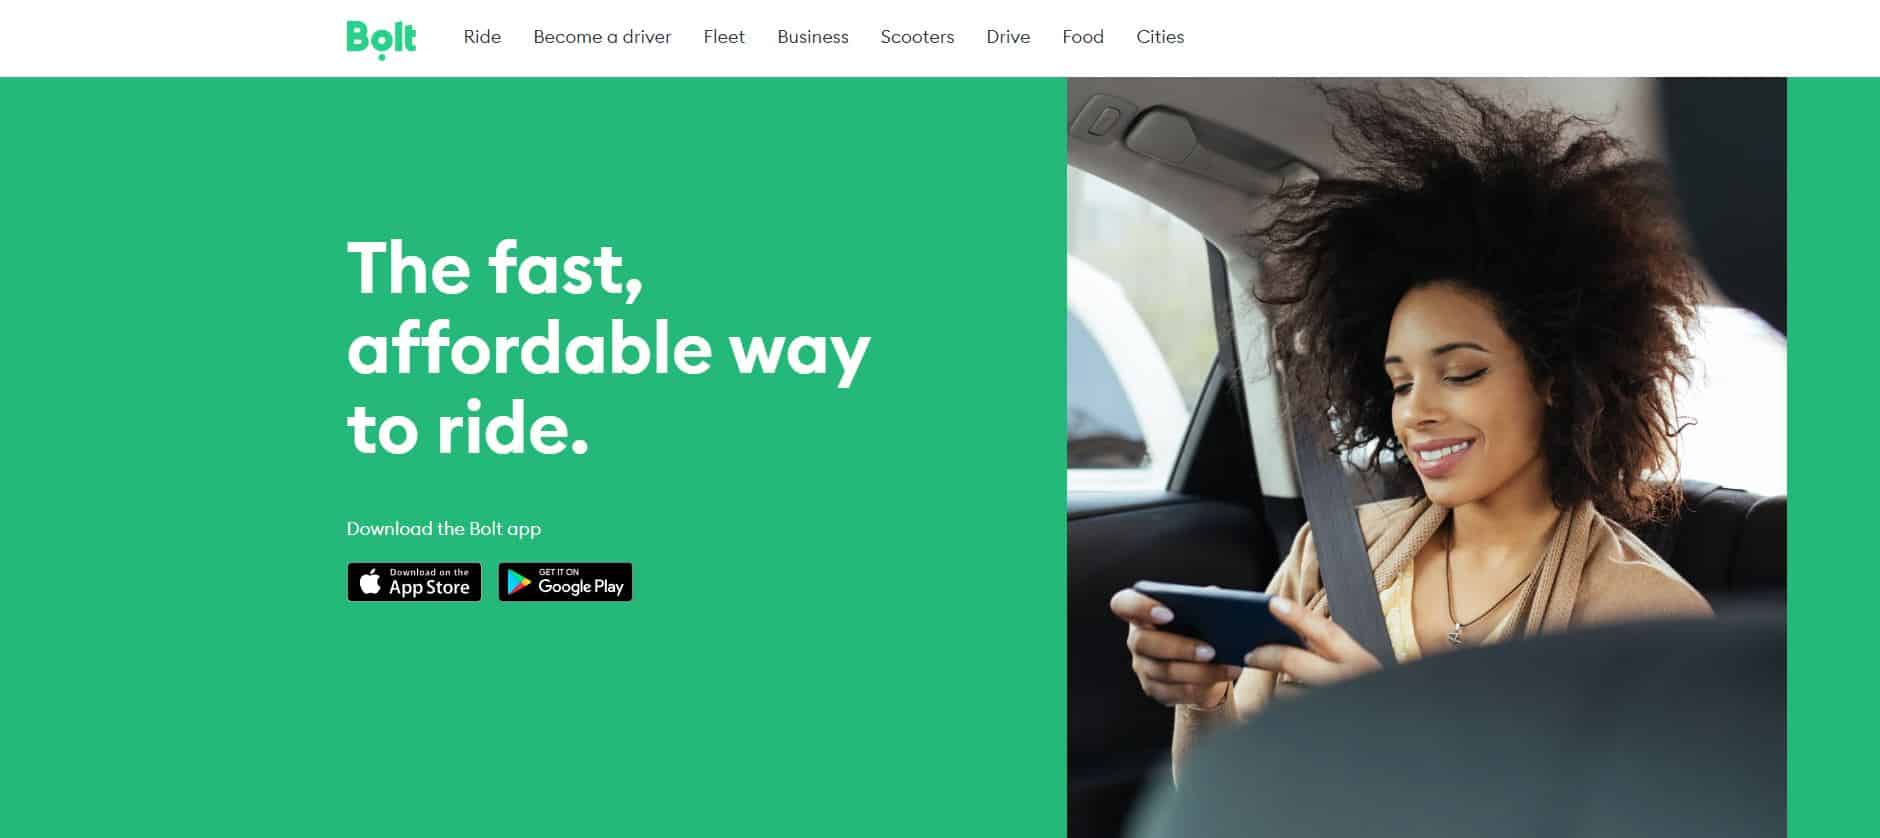 screenshot of bolt rideshare service homepage